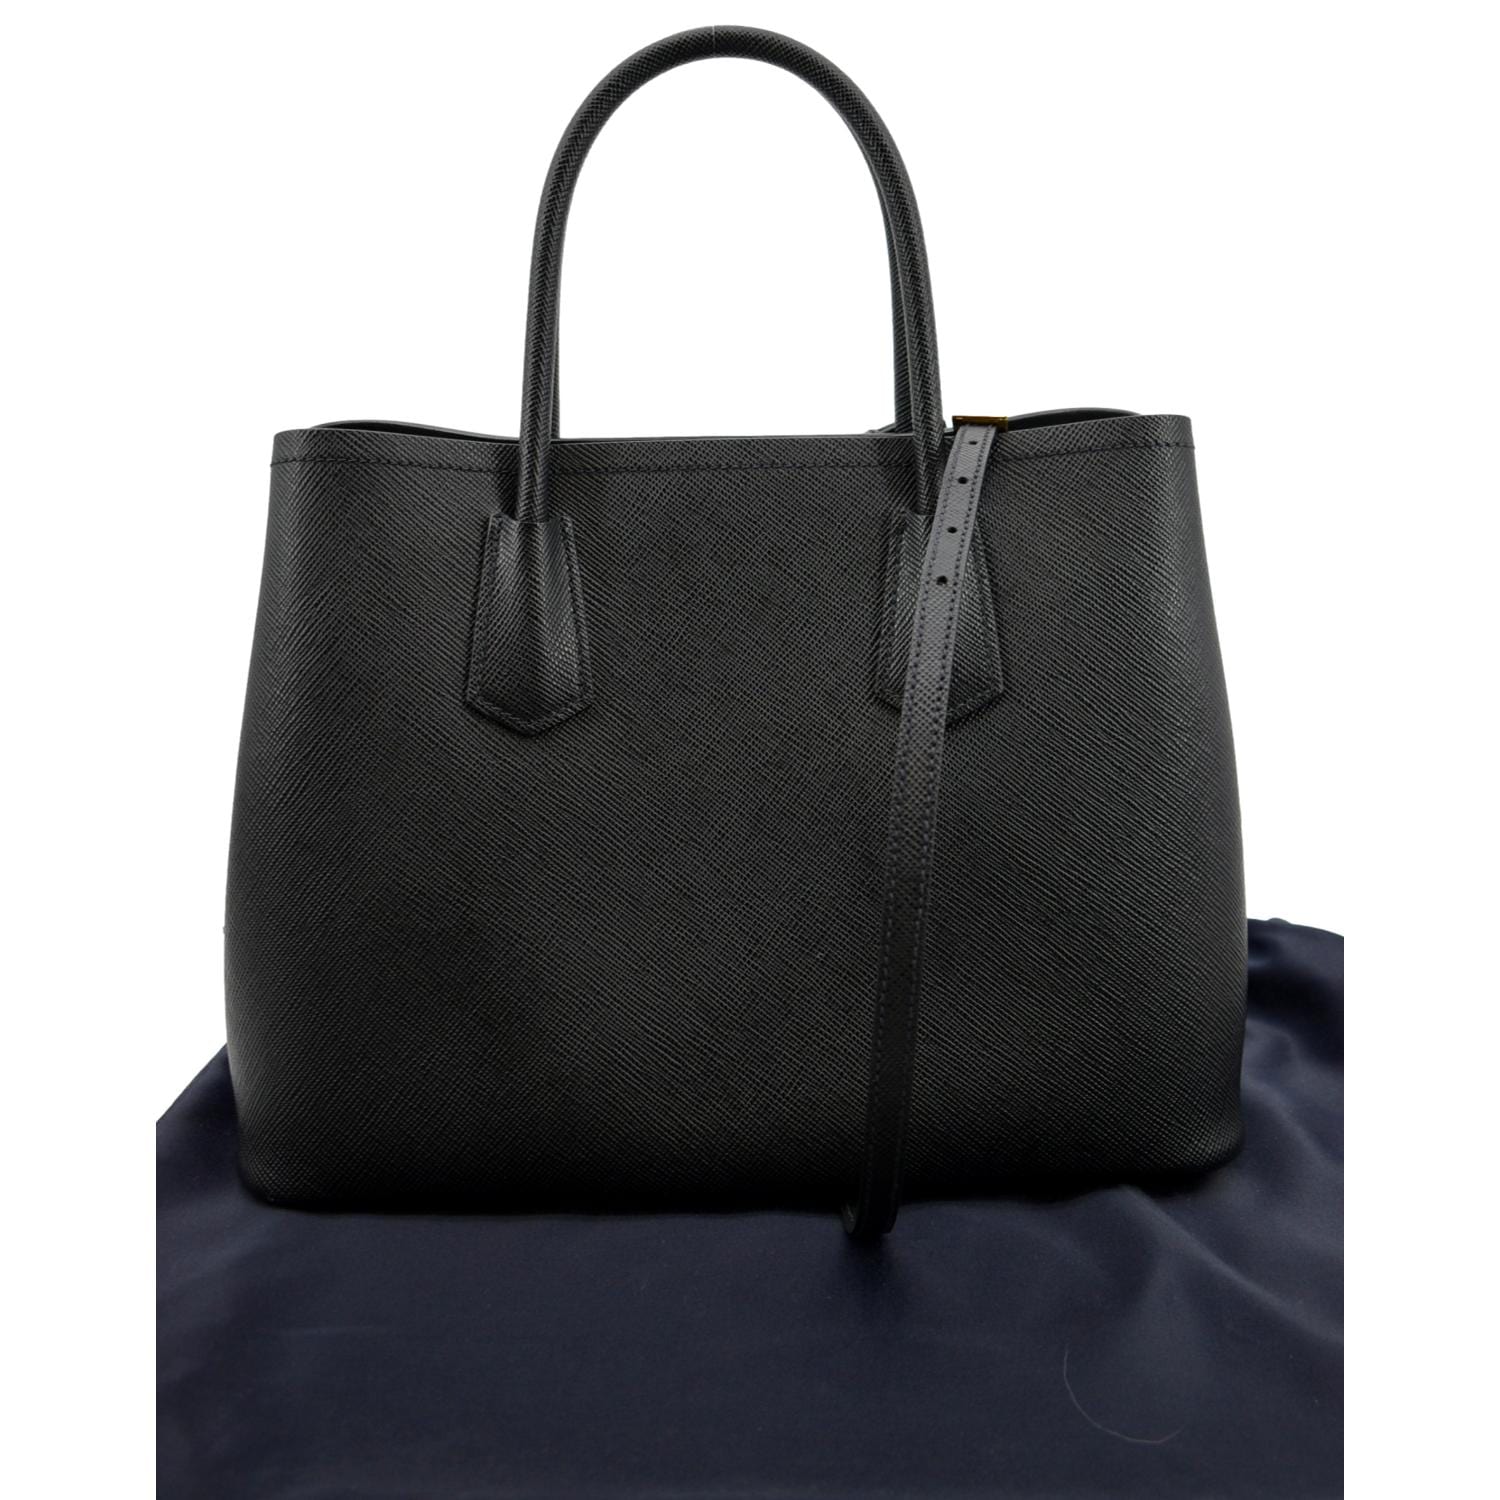 Prada - Leather Mini Tote Bag